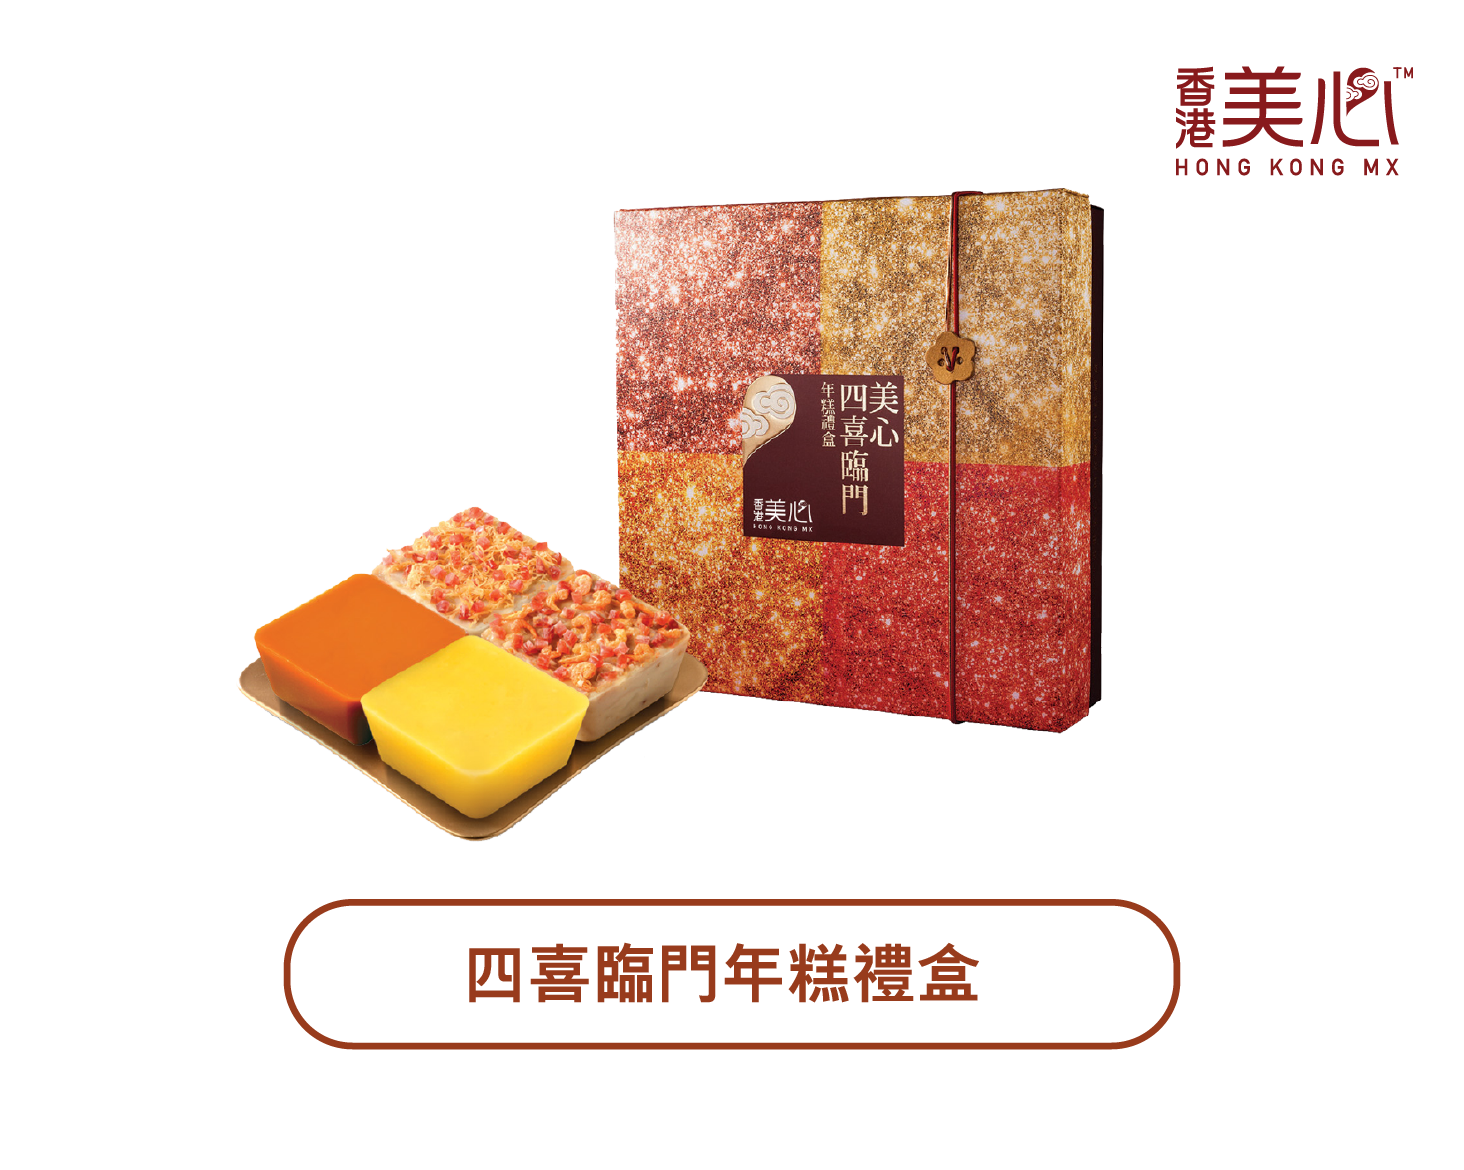 Hong Kong MX | MX Chinese Pudding Collection (Physical Coupon)